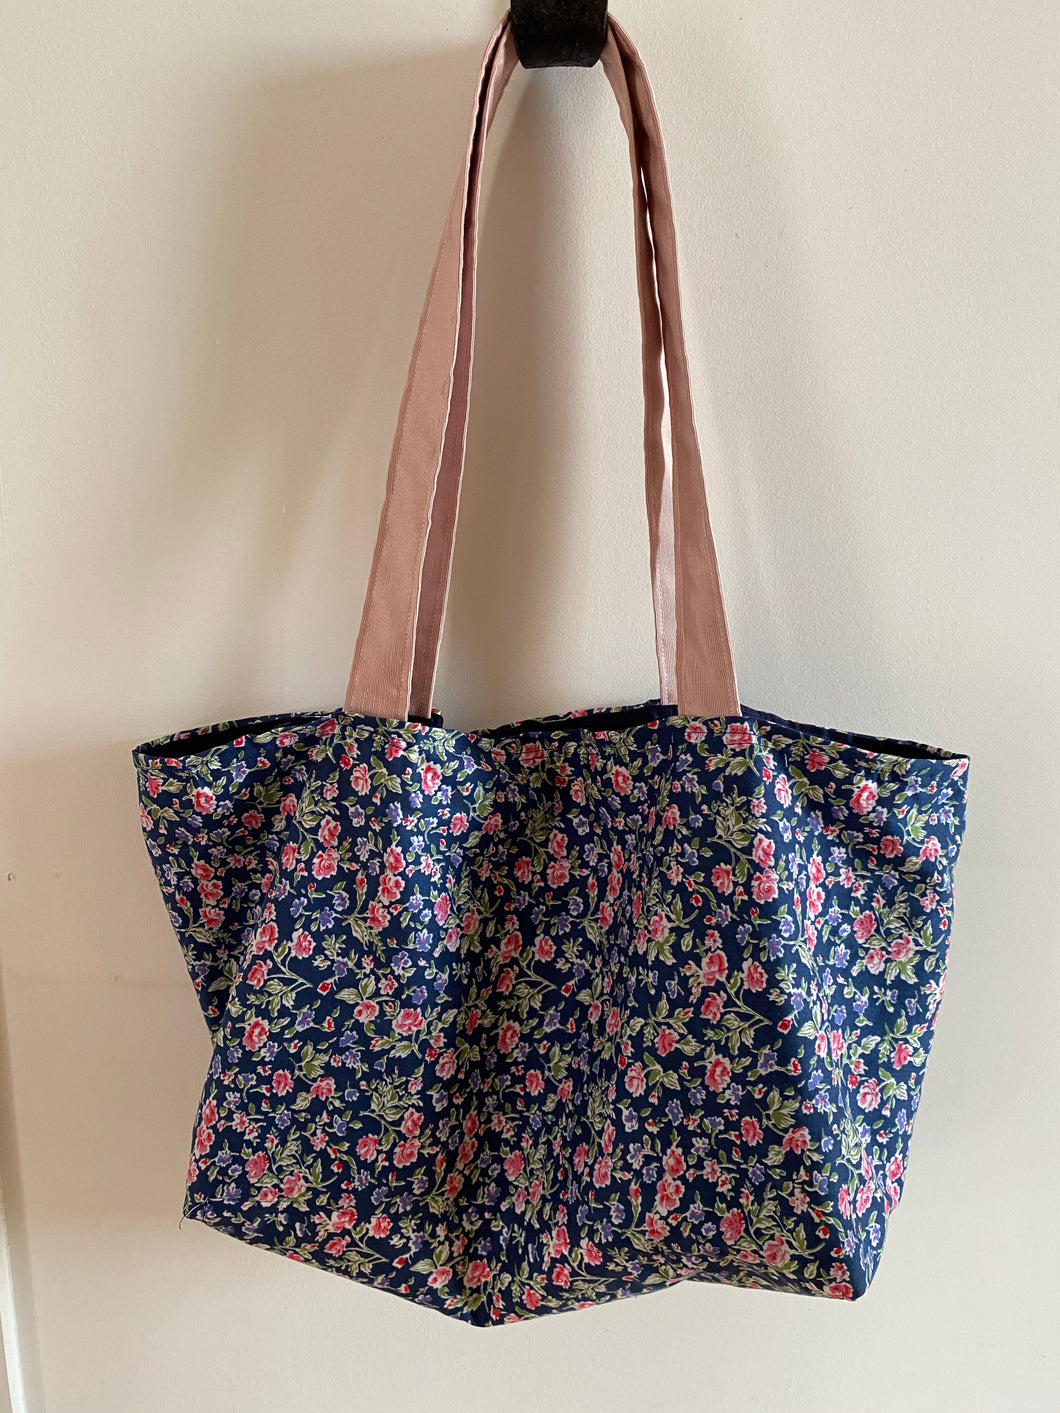 Handmade Floral Shopping Tote Bag